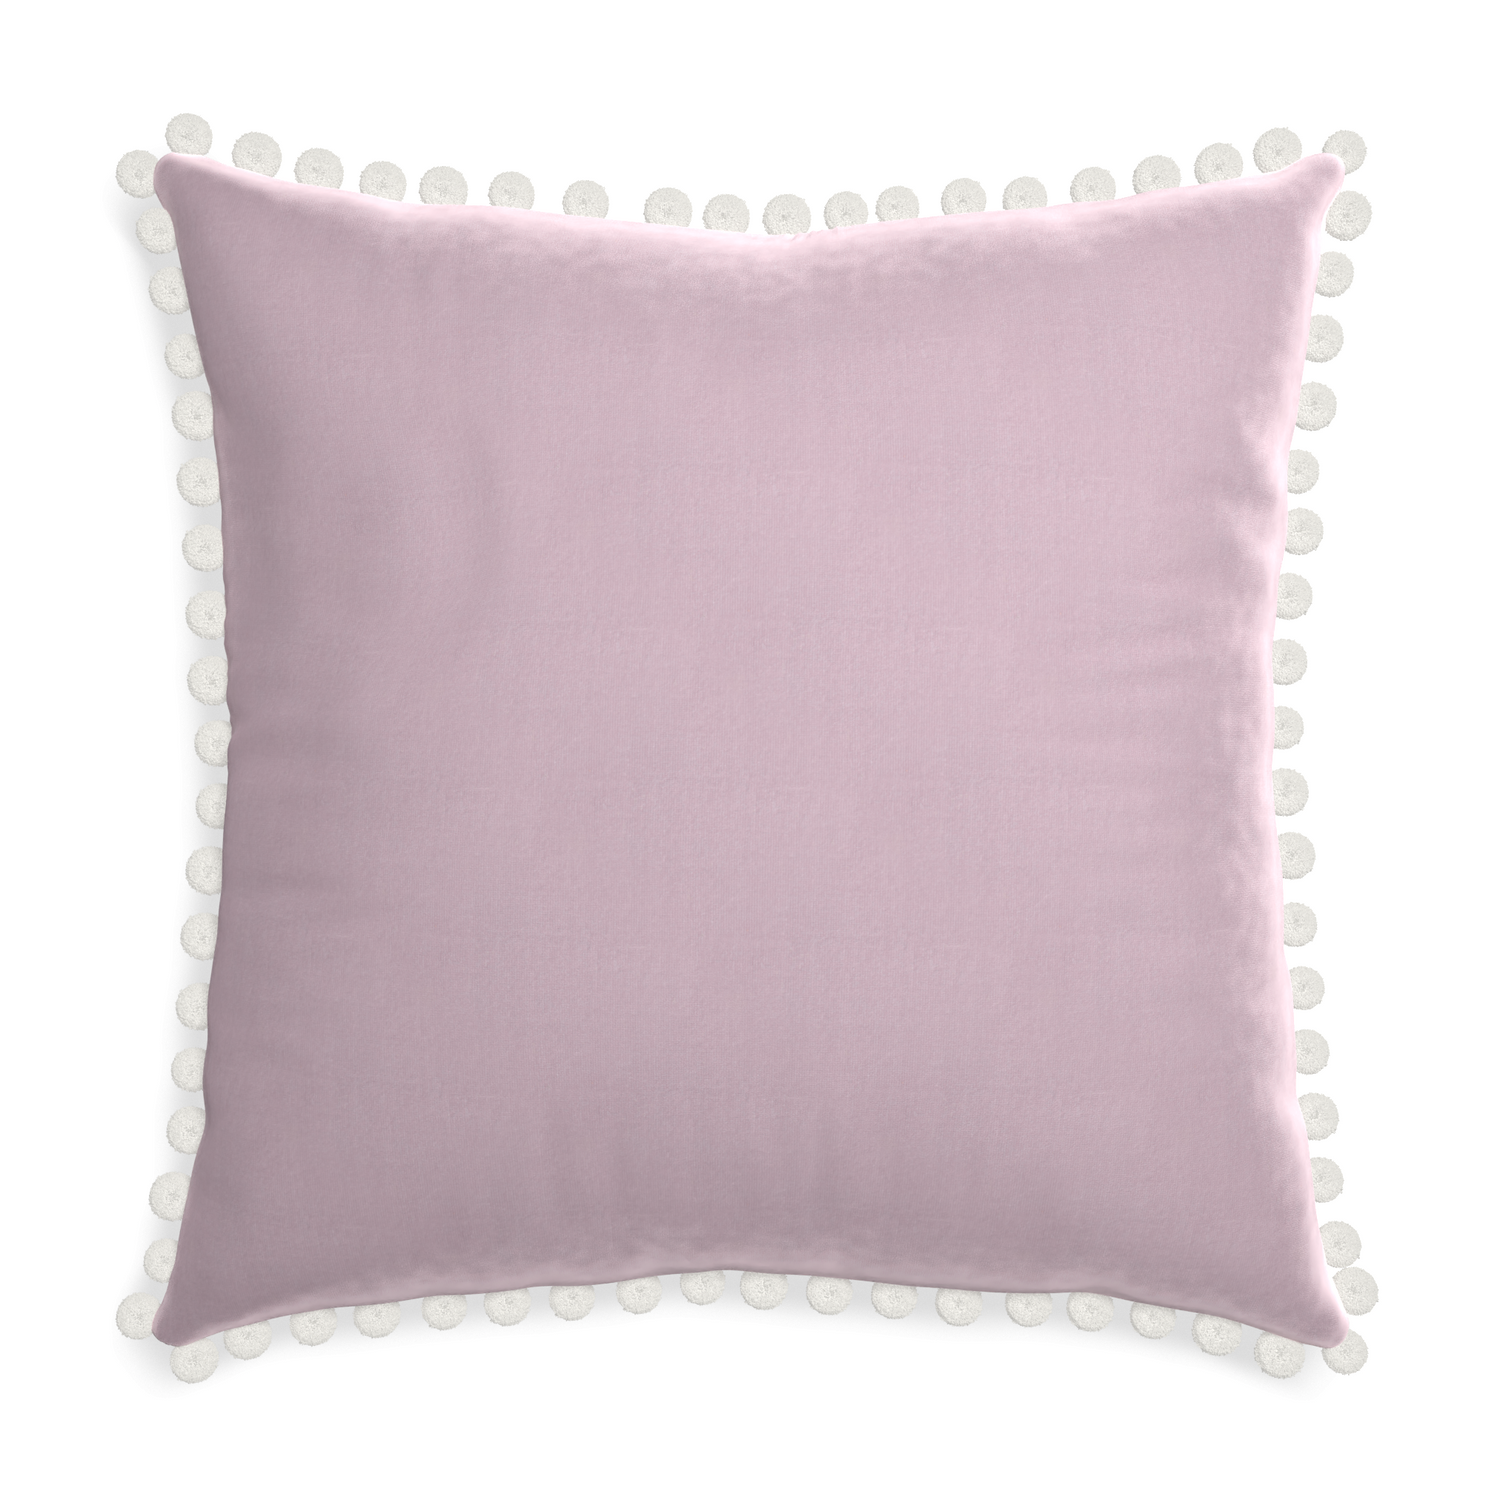 Euro-sham lilac velvet custom pillow with snow pom pom on white background